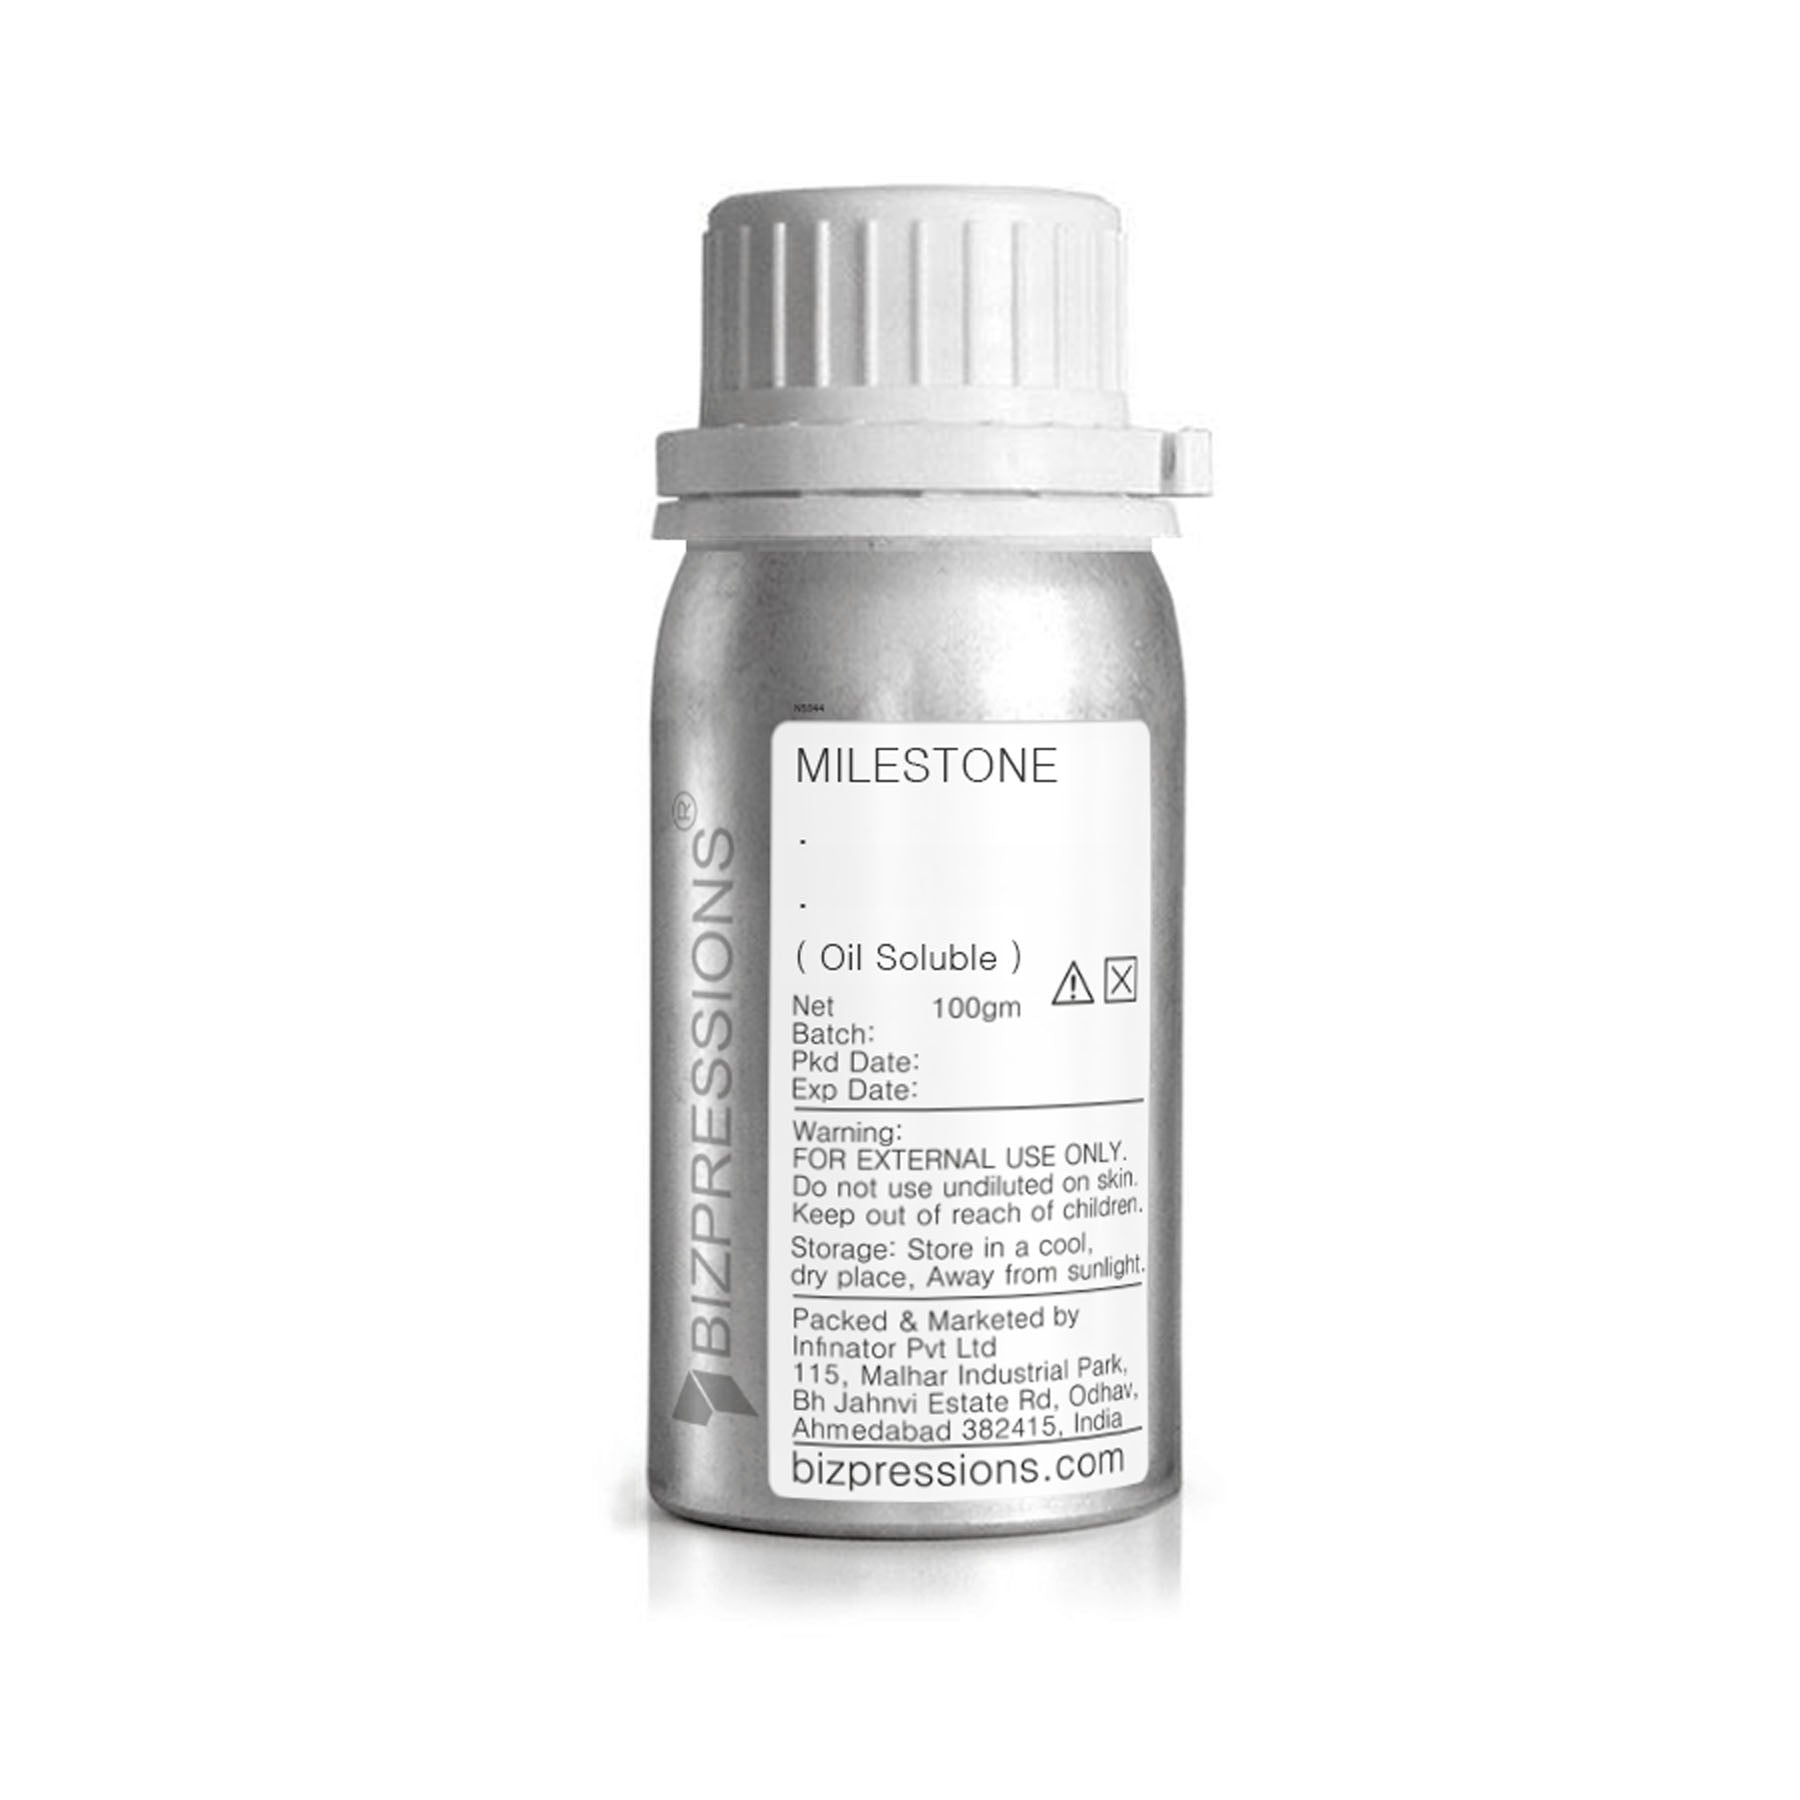 MILESTONE - Fragrance ( Oil Soluble ) - 100 gm